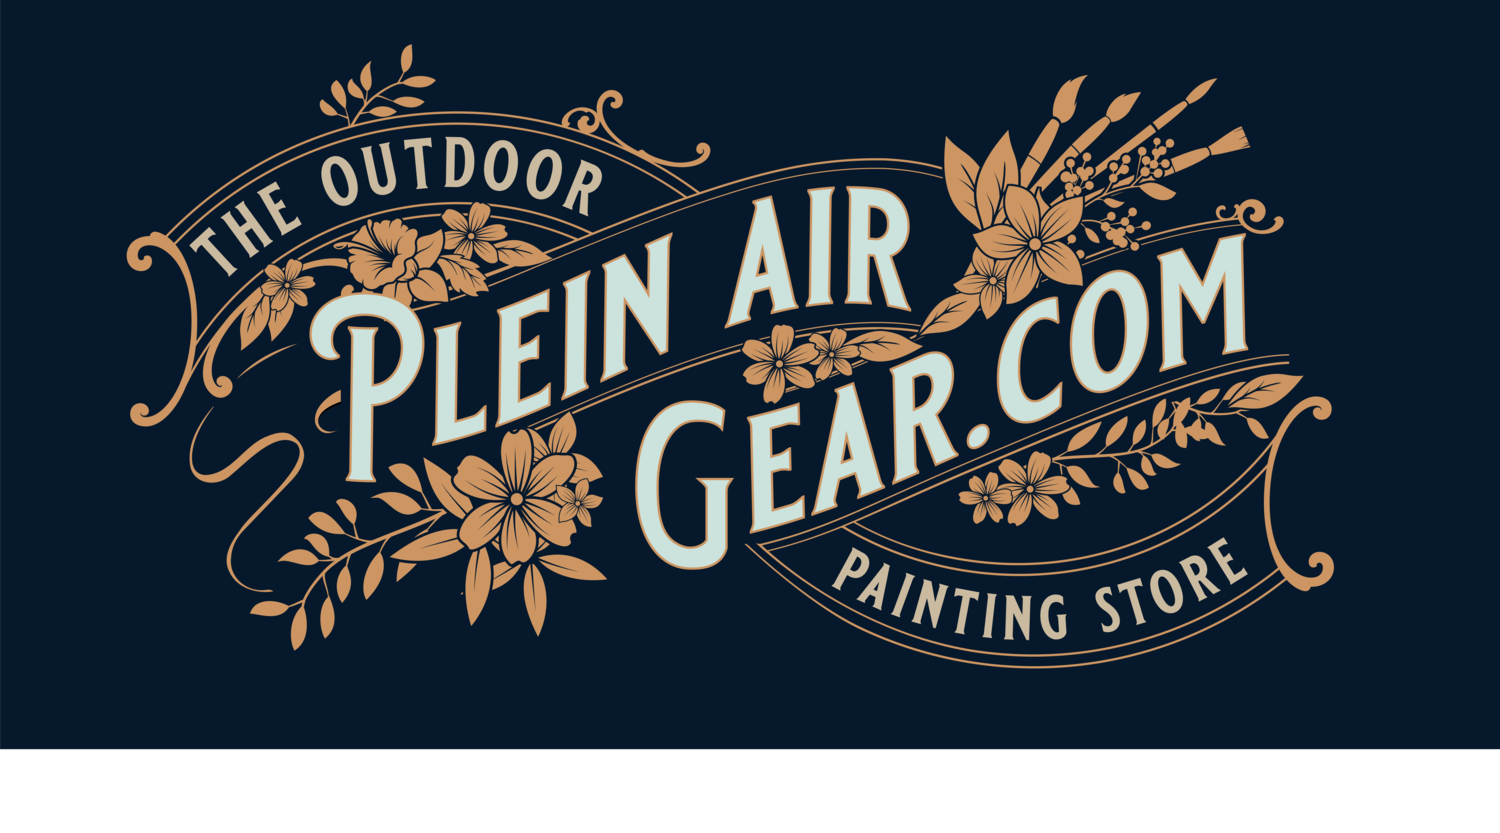 Plein Air Gear for the Outdoor Painter